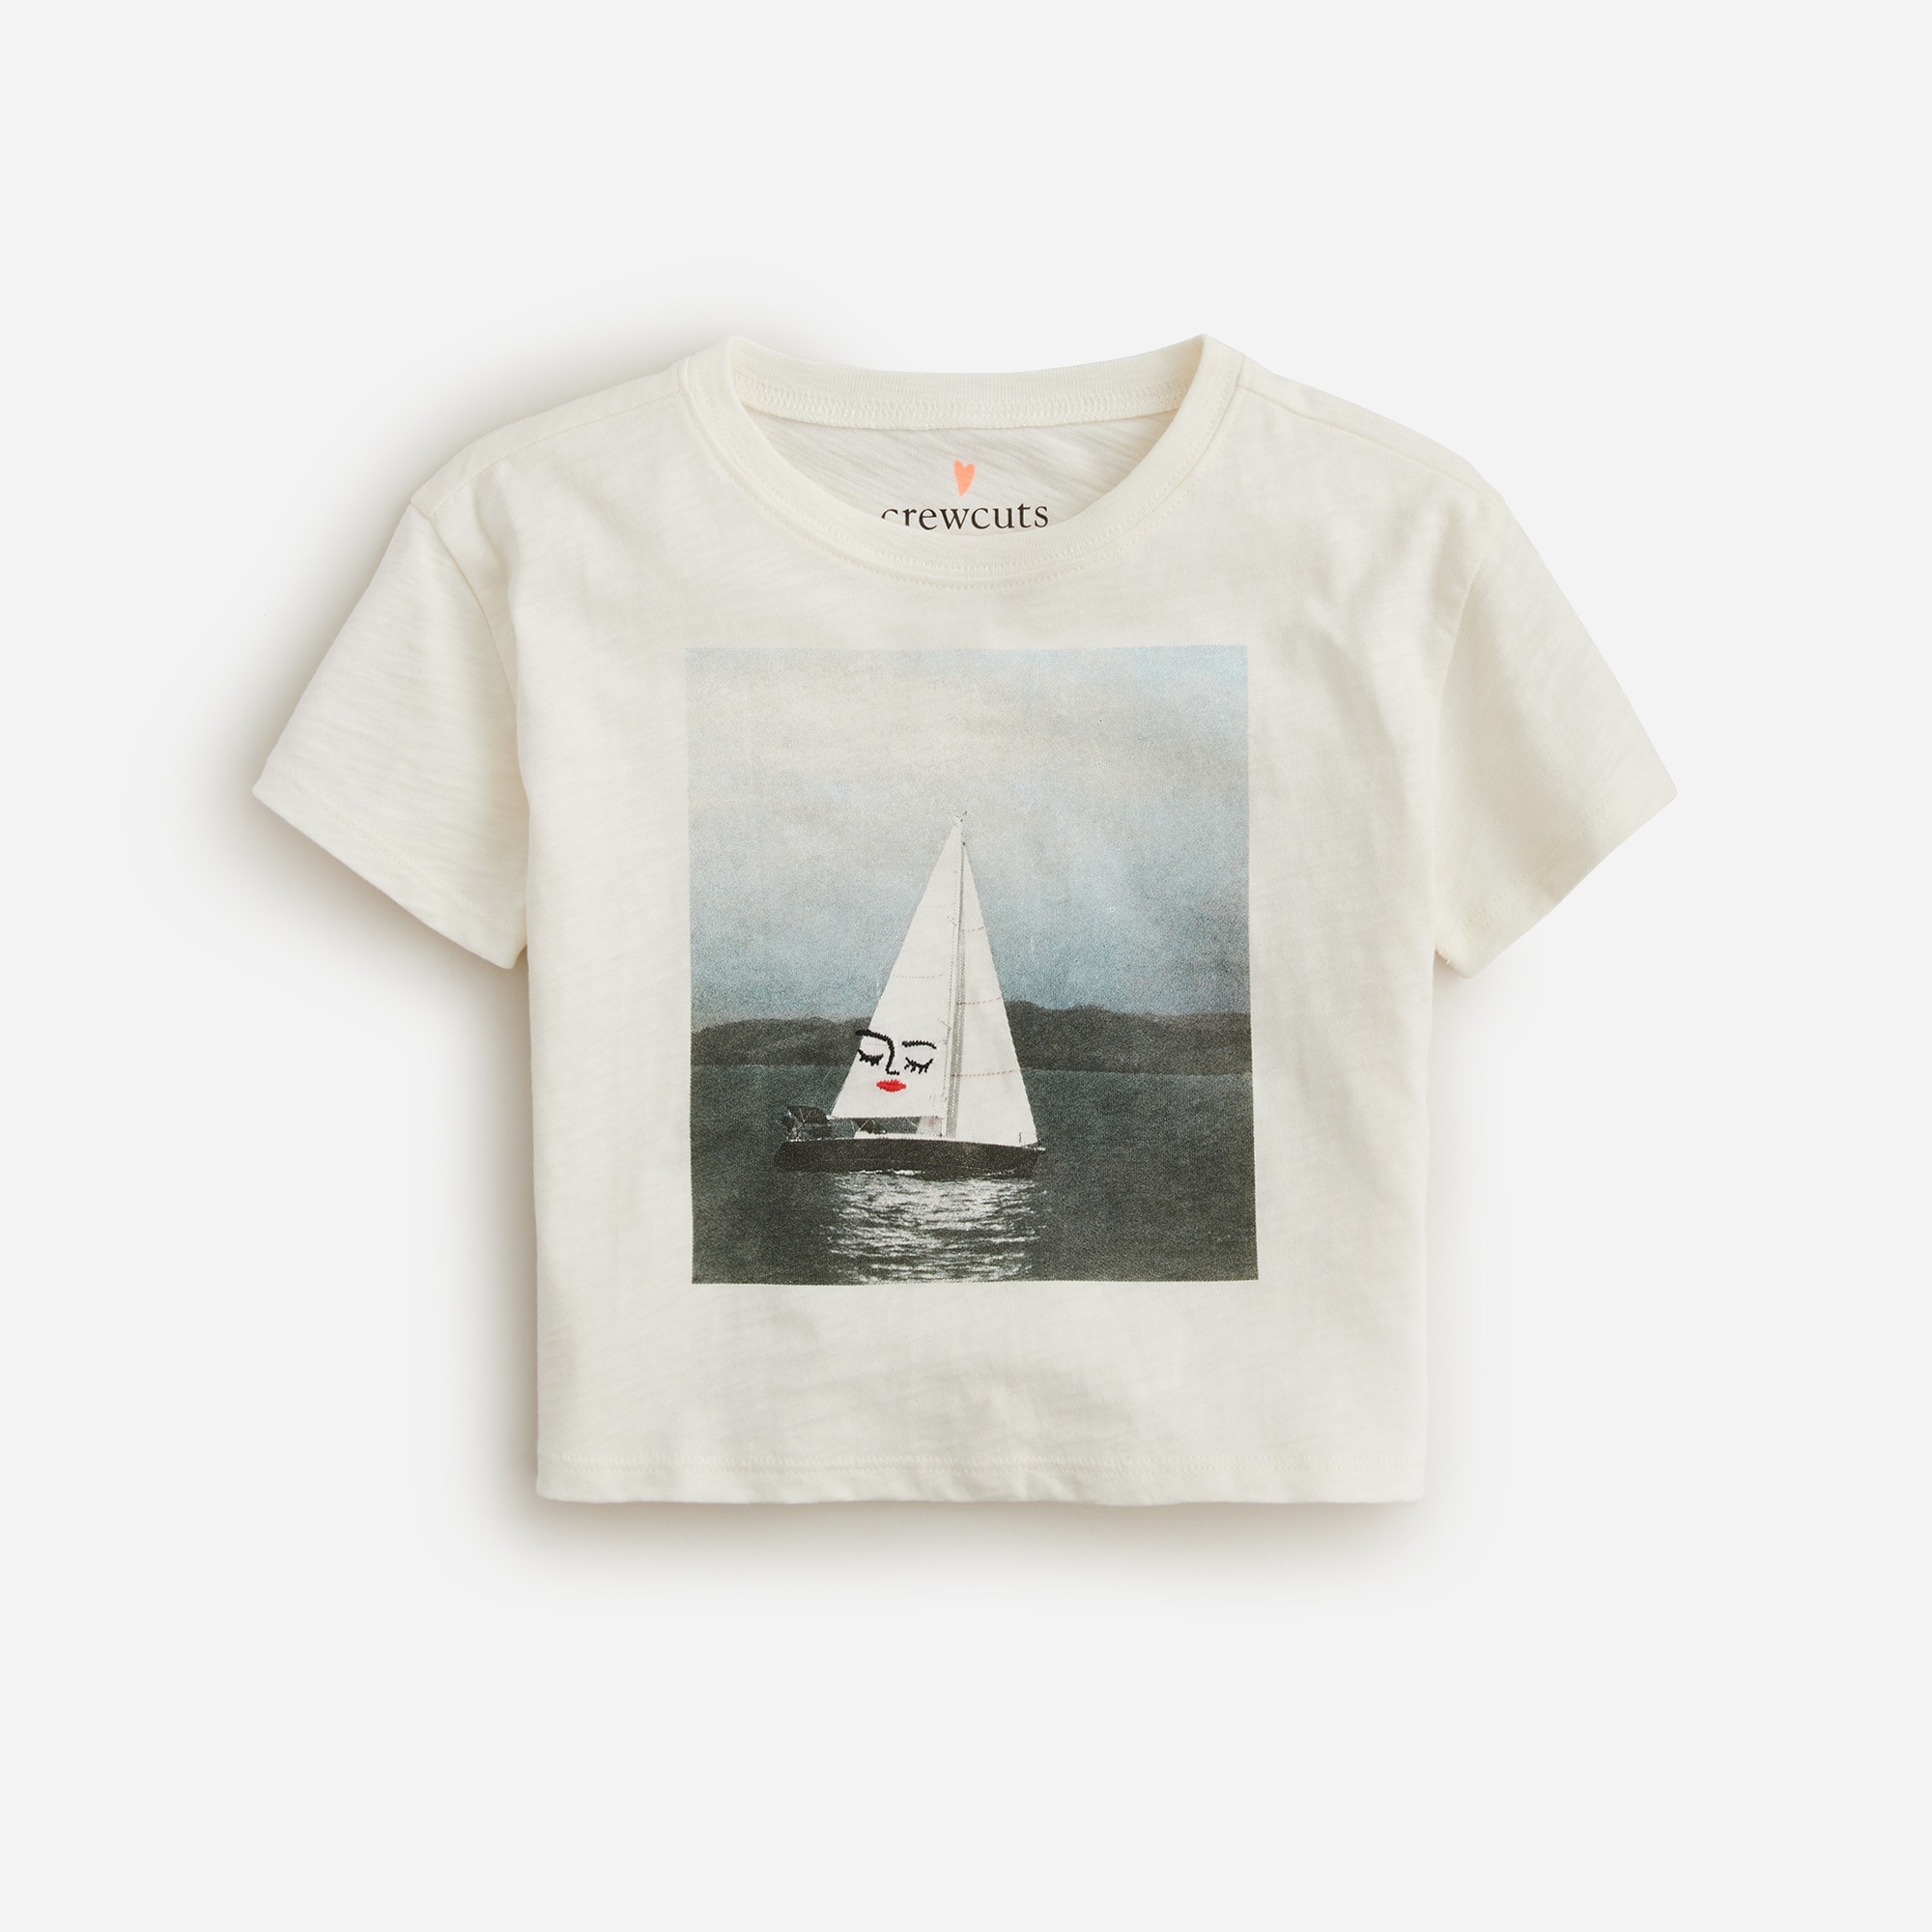  Girls' cropped sailboat photo graphic T-shirt